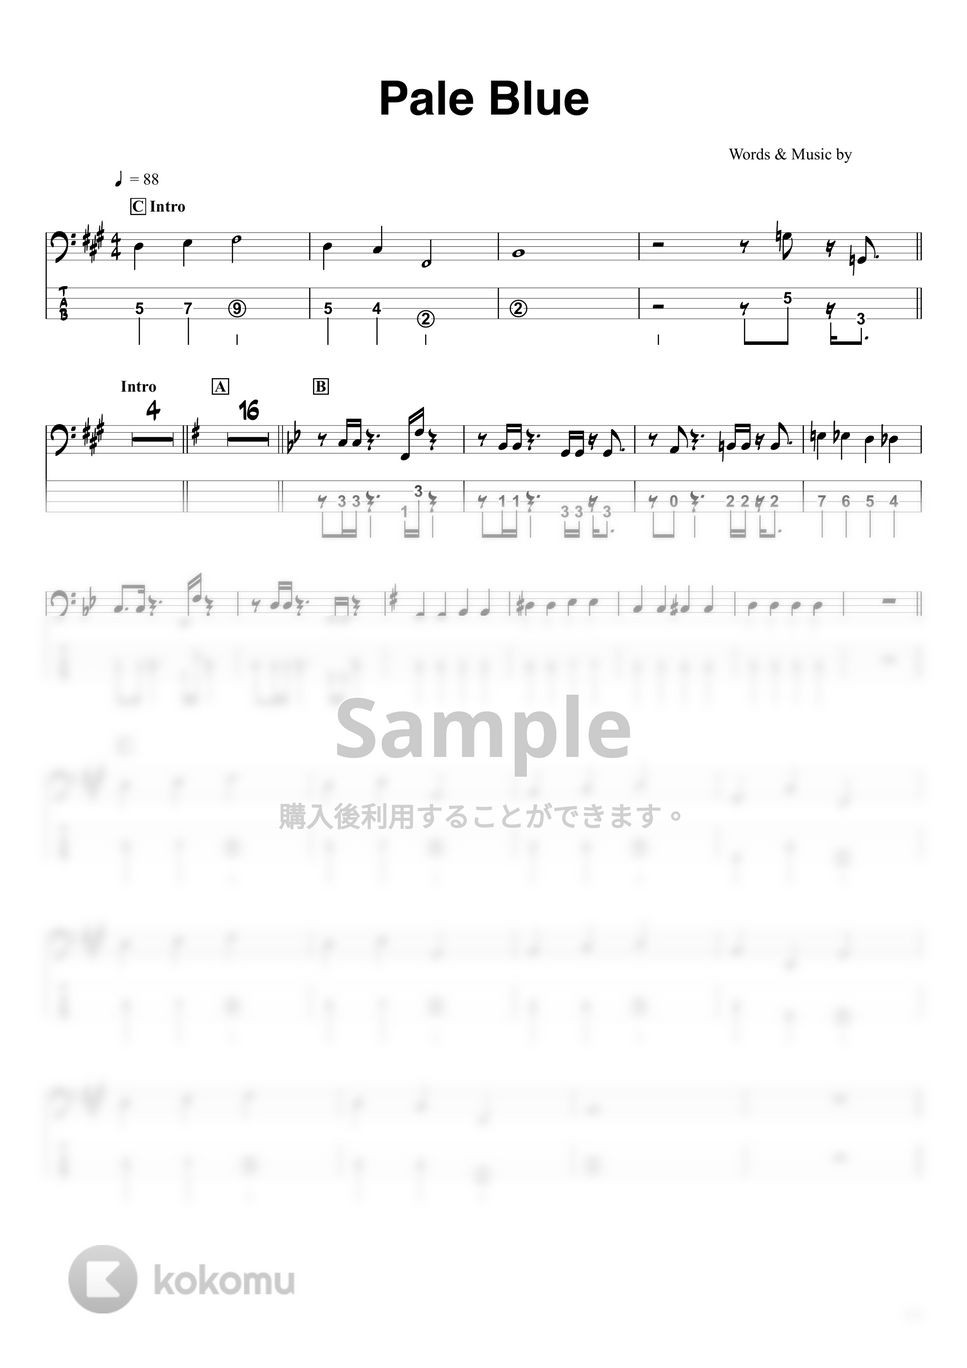 米津玄師 - Pale Blue (ベースTAB譜☆4弦ベース対応) by swbass